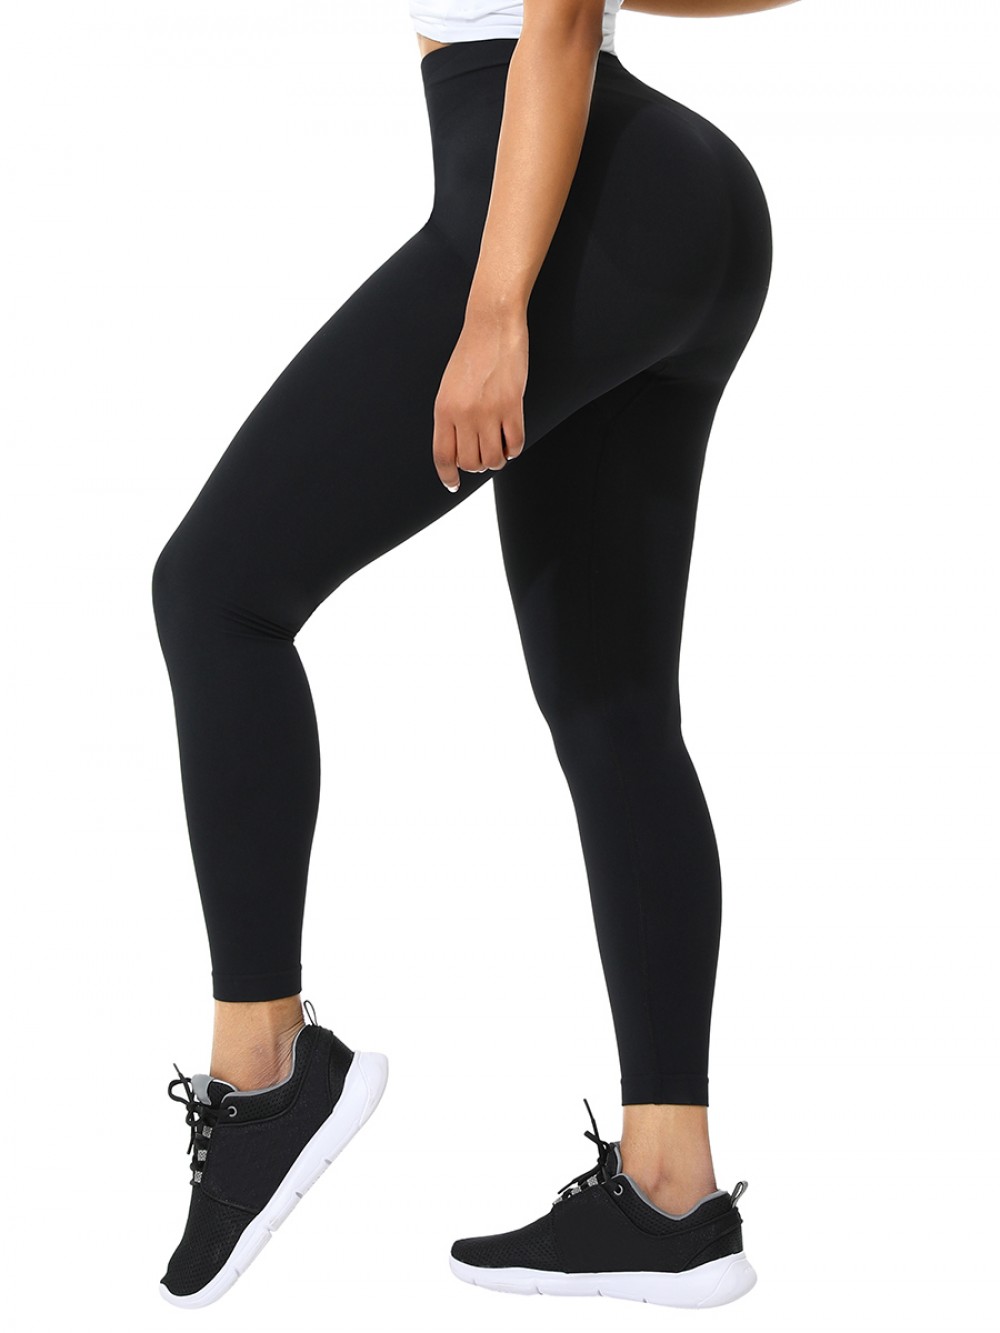 Black Seamless High Waist Tummy Control Shapewear Pants For Exercising